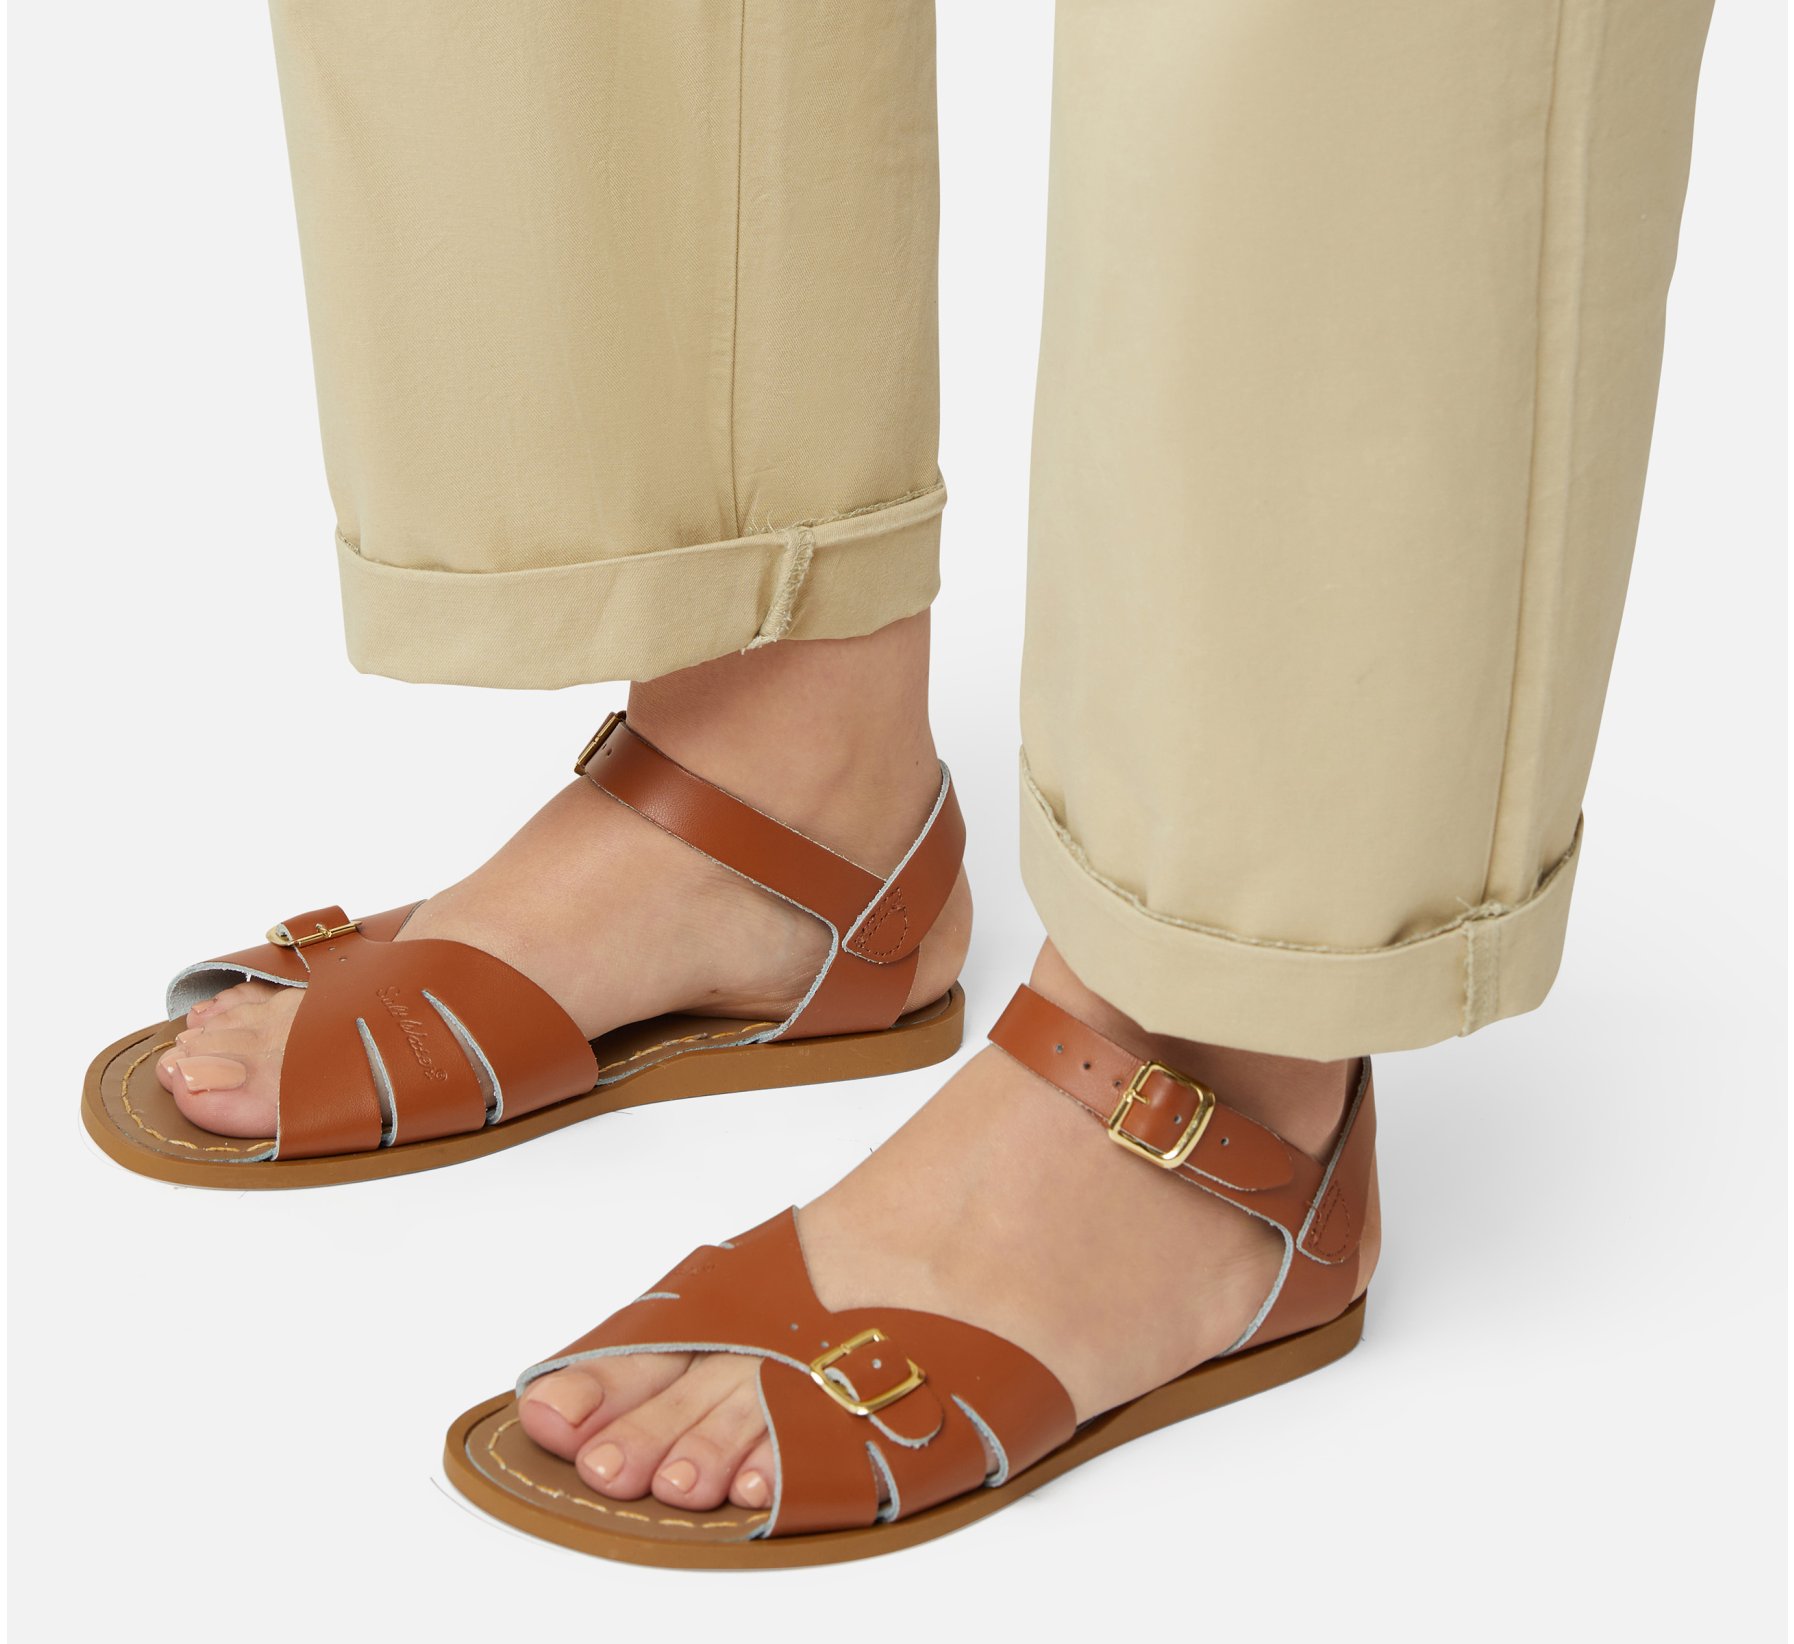 Classic Tan Sandal - Salt Water Sandals